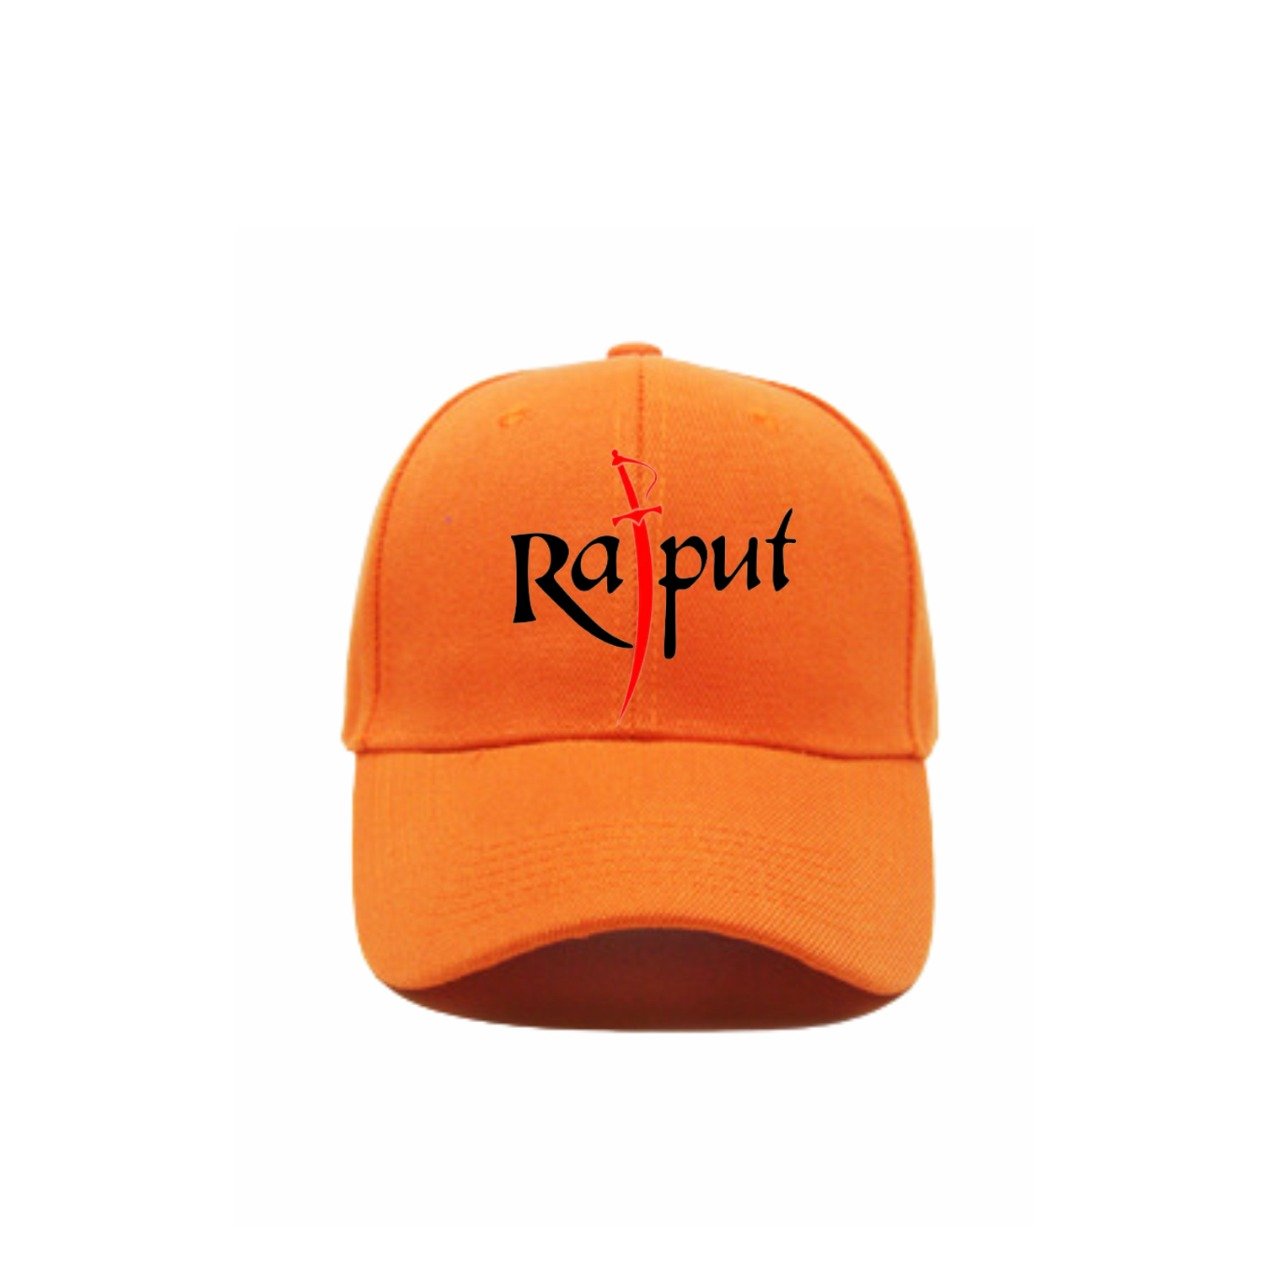 Rajput Printed Cap (Free Size)